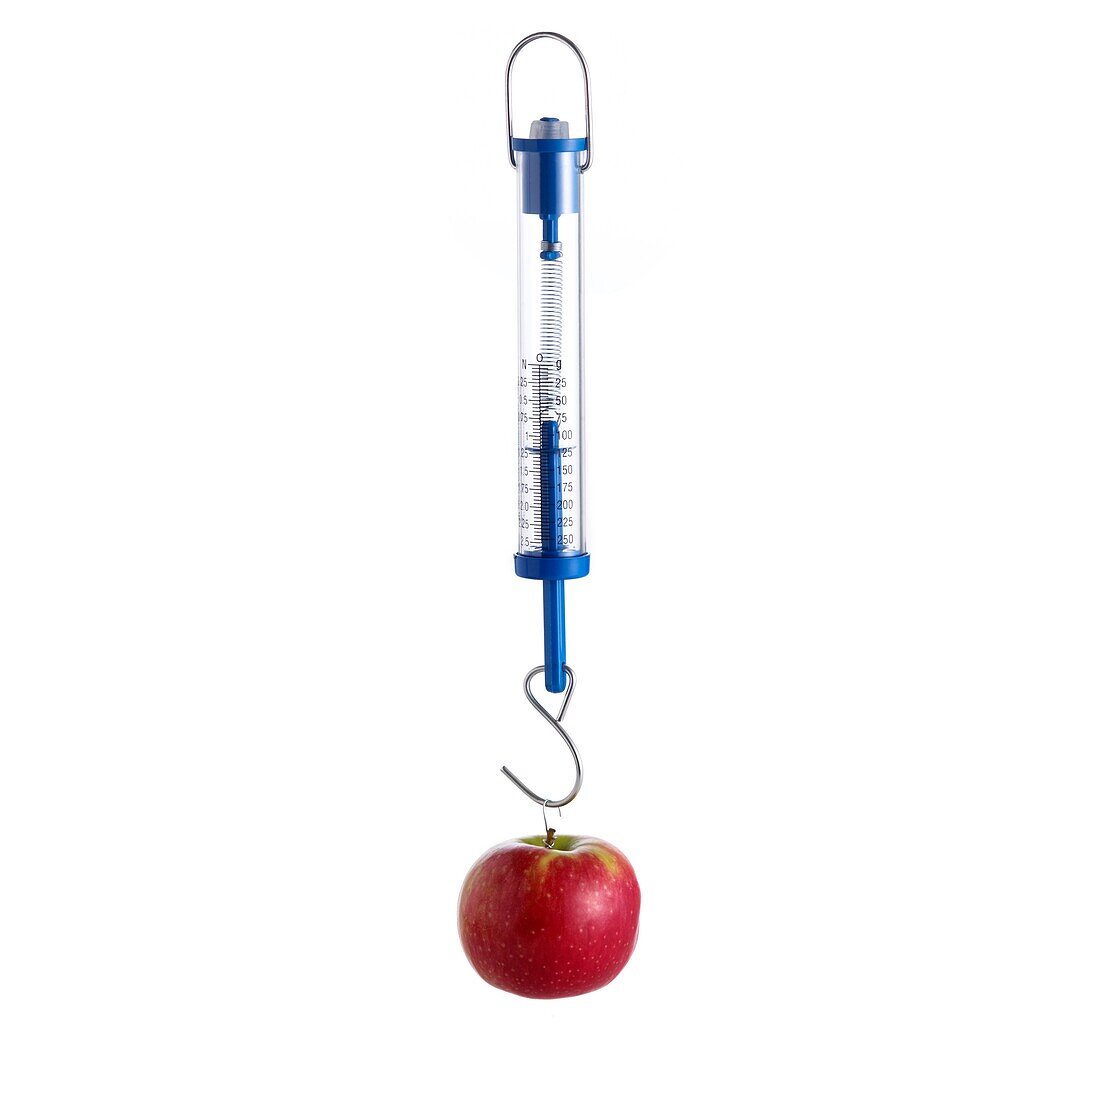 Weighing an apple